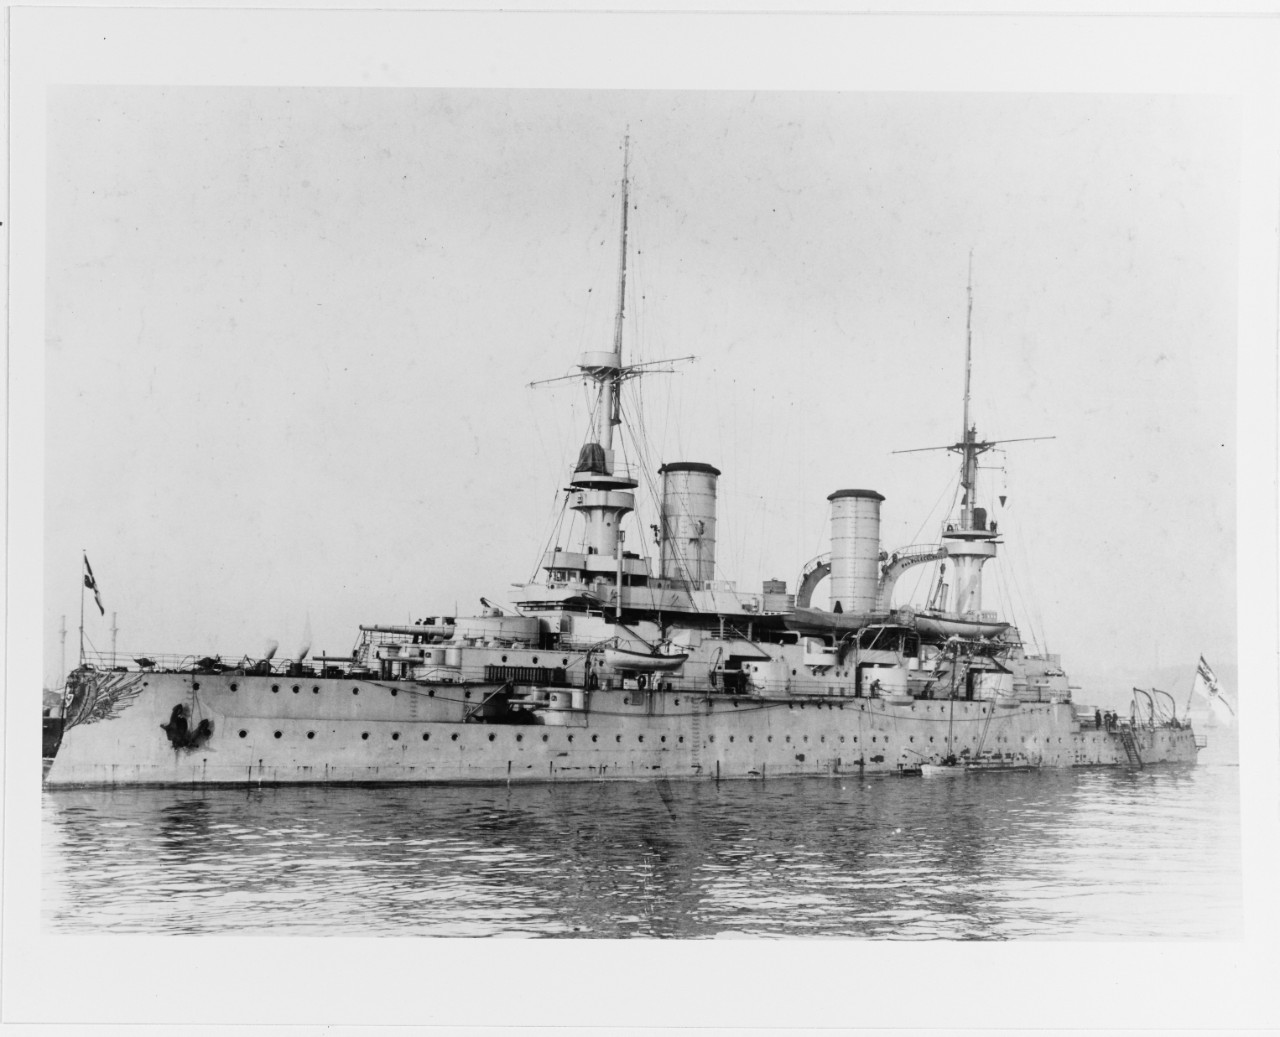 KAISER KARL DER GROSSE (German battleship, 1899-1919)